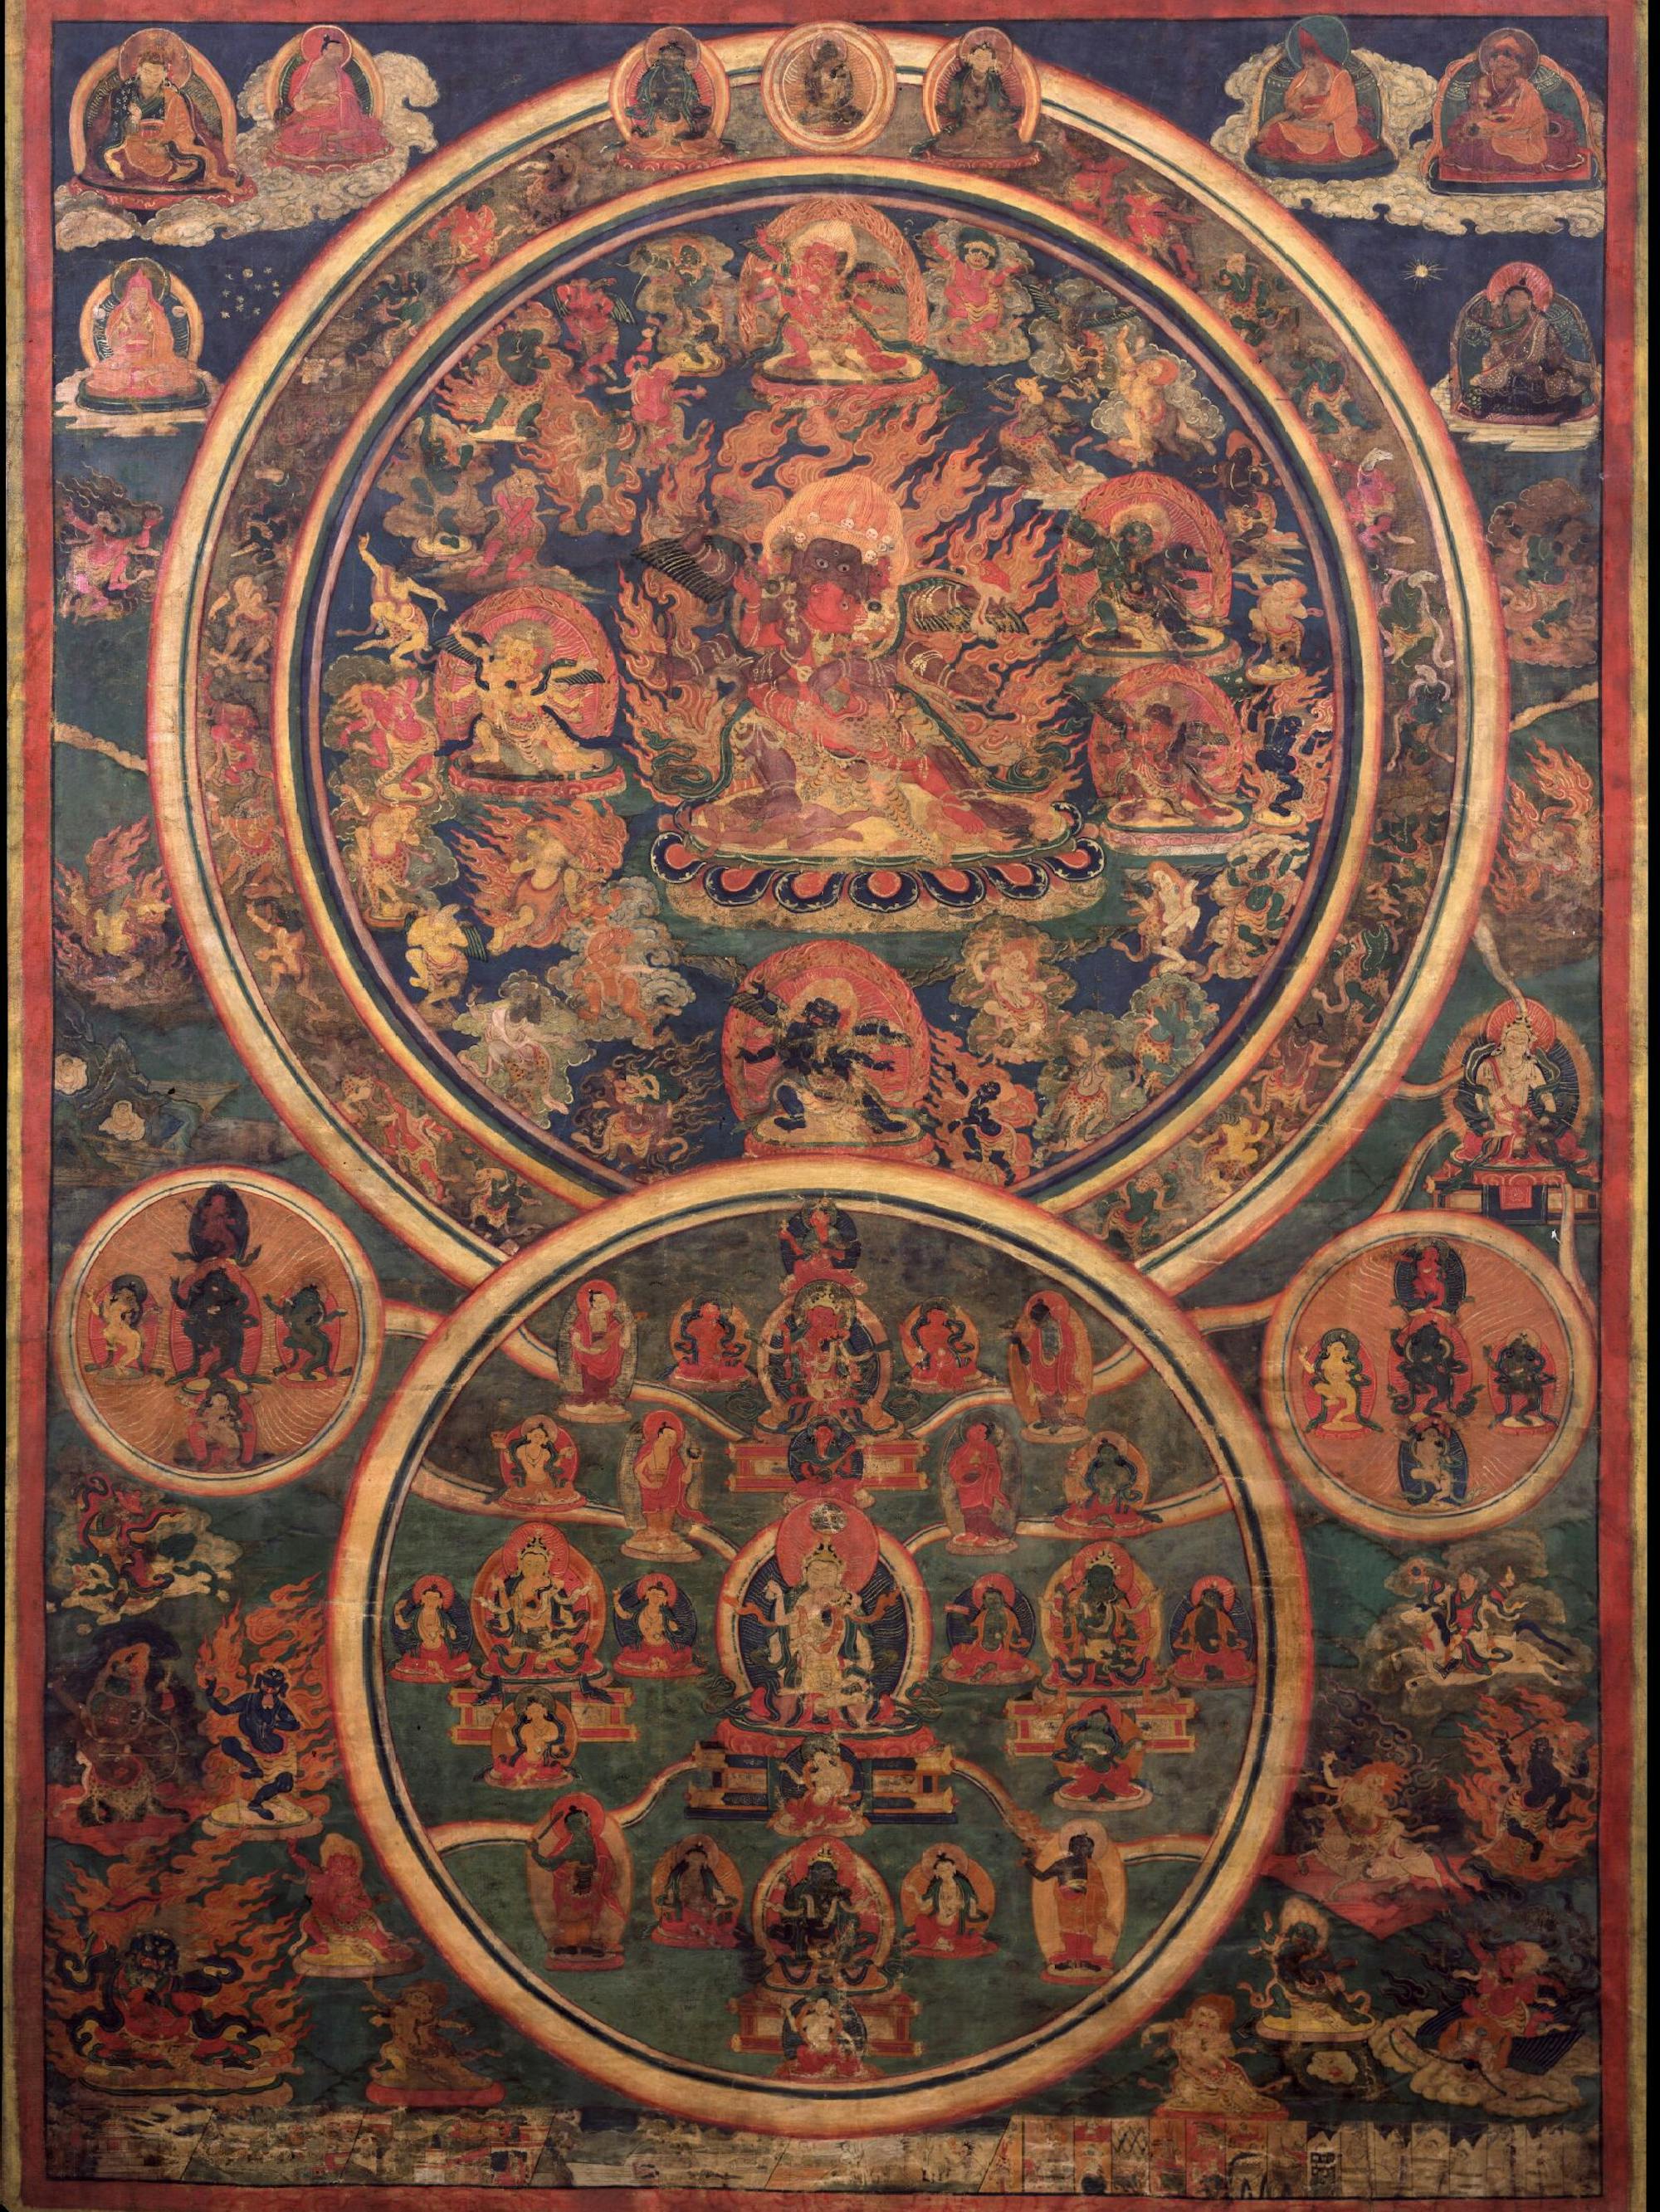 An ornate rug with interlocking circles.